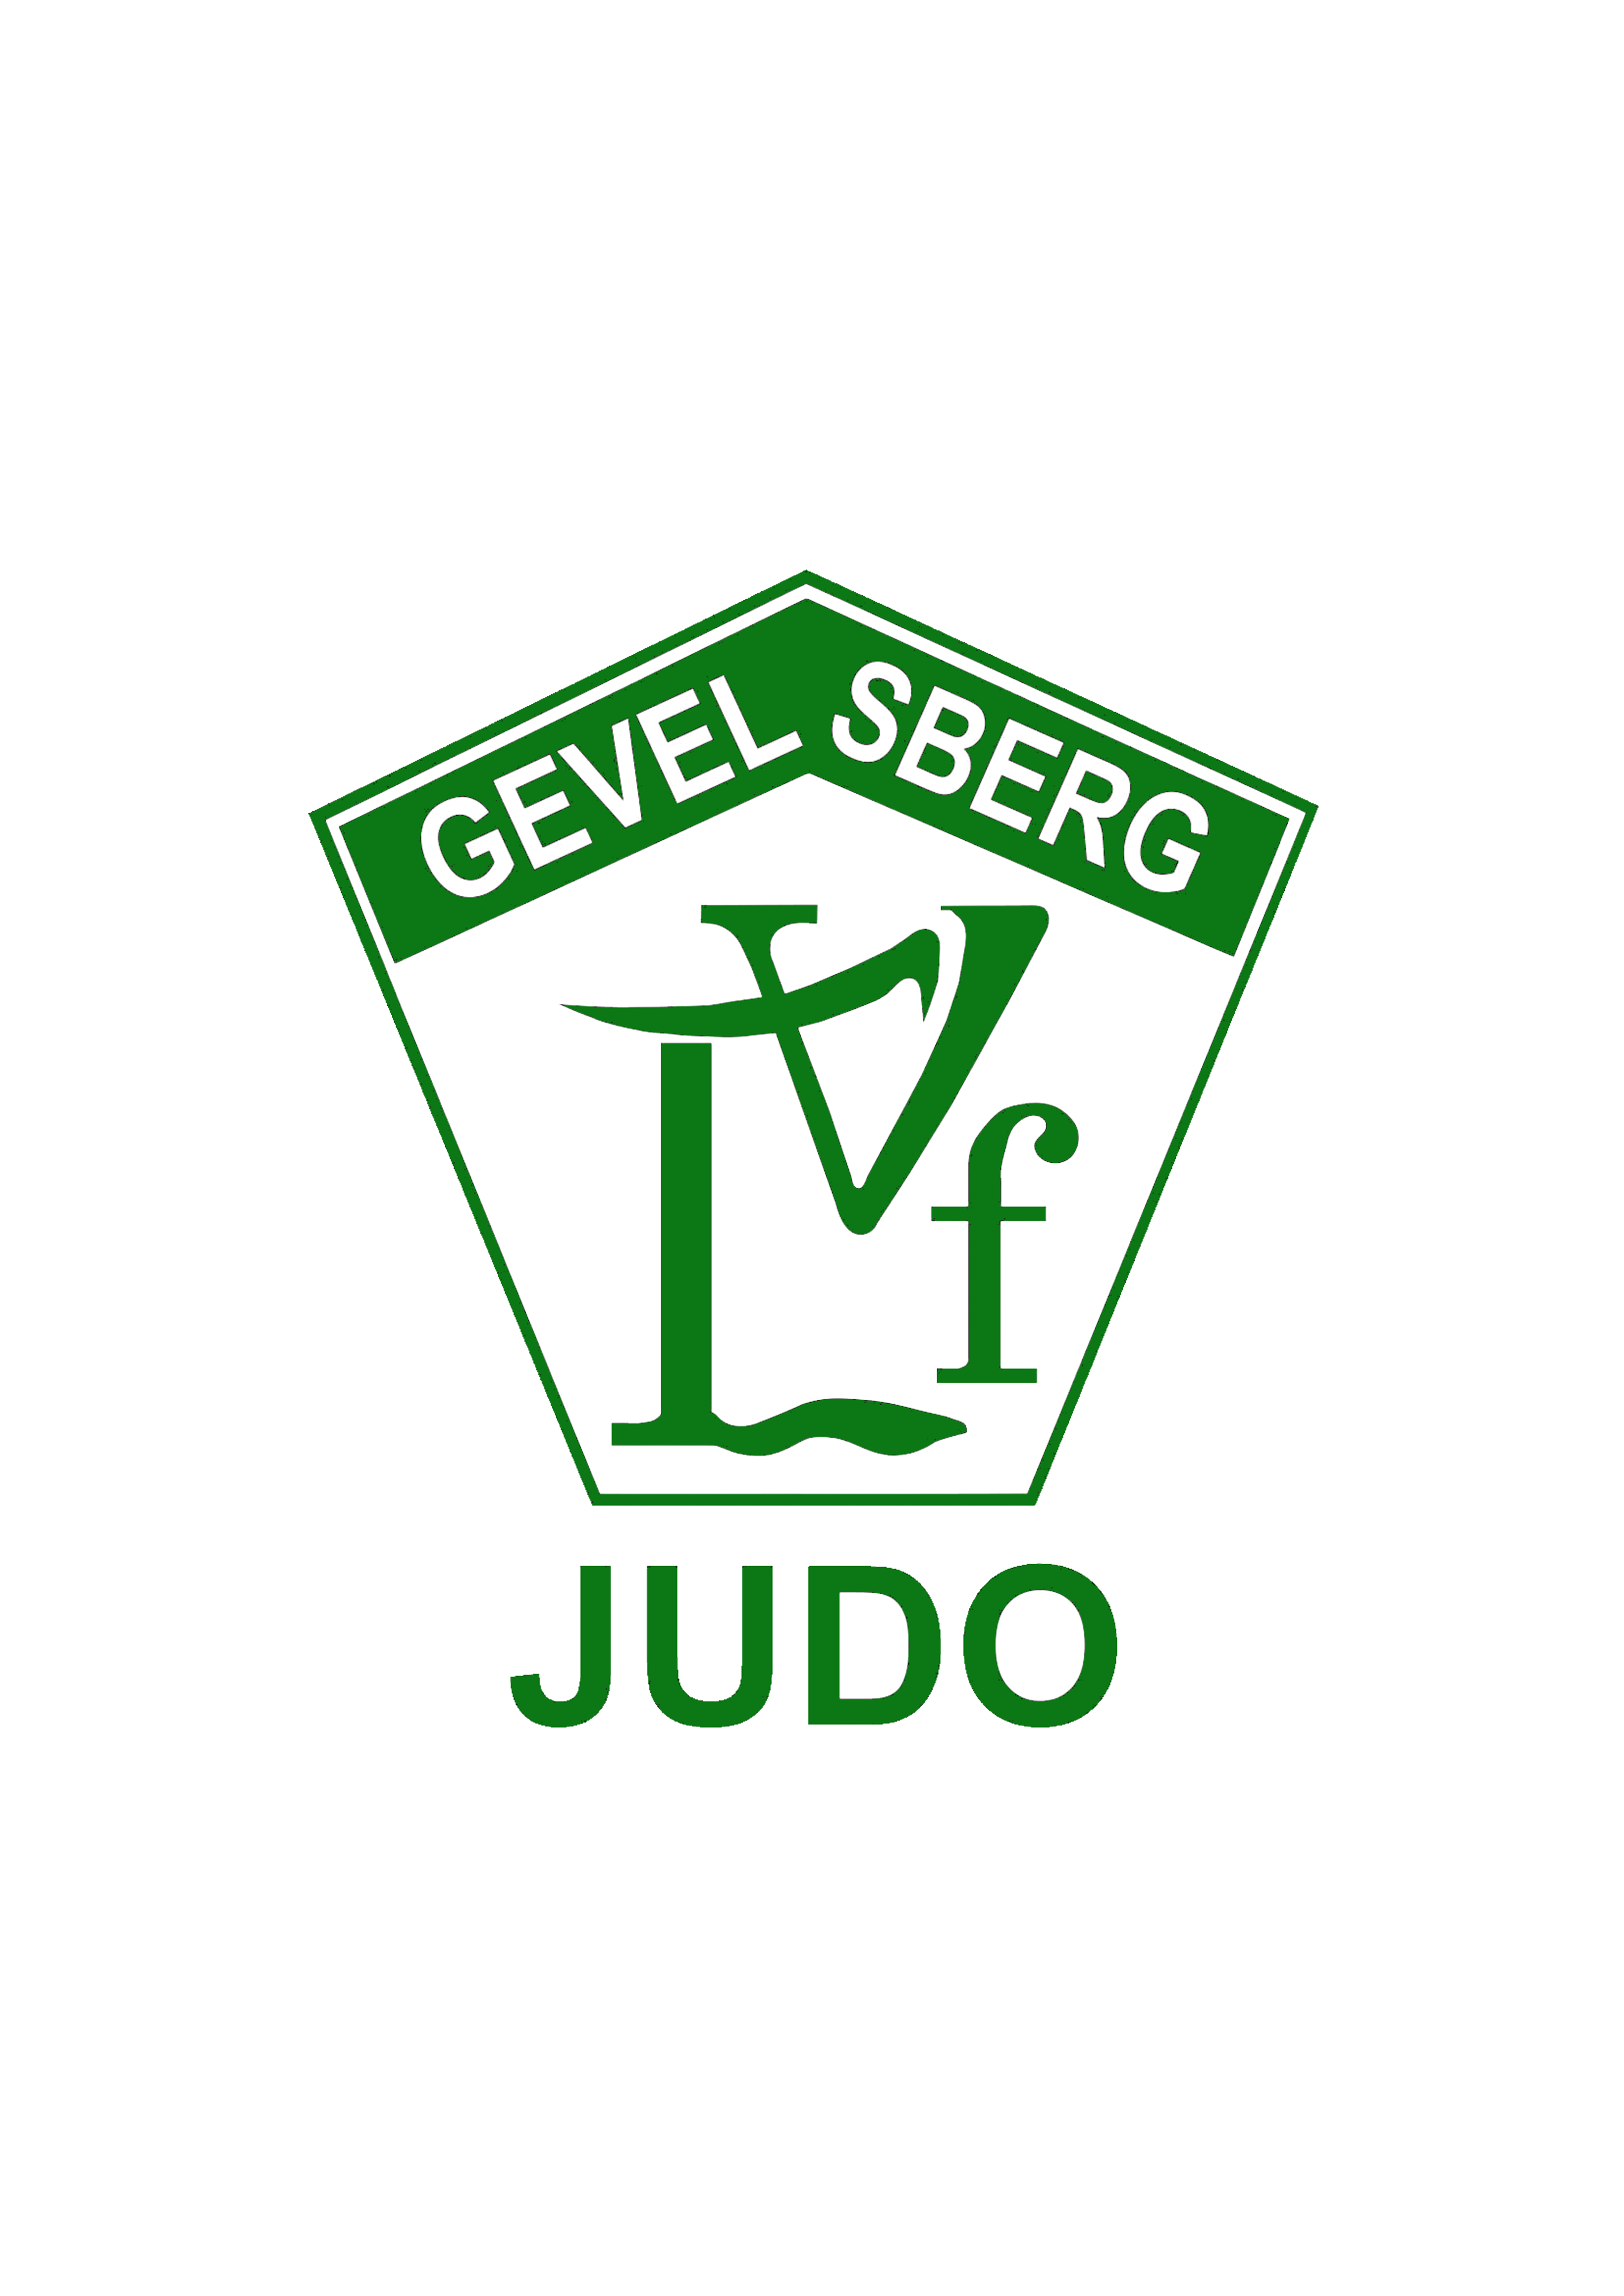 VfL Gevelsberg Judo e.V.